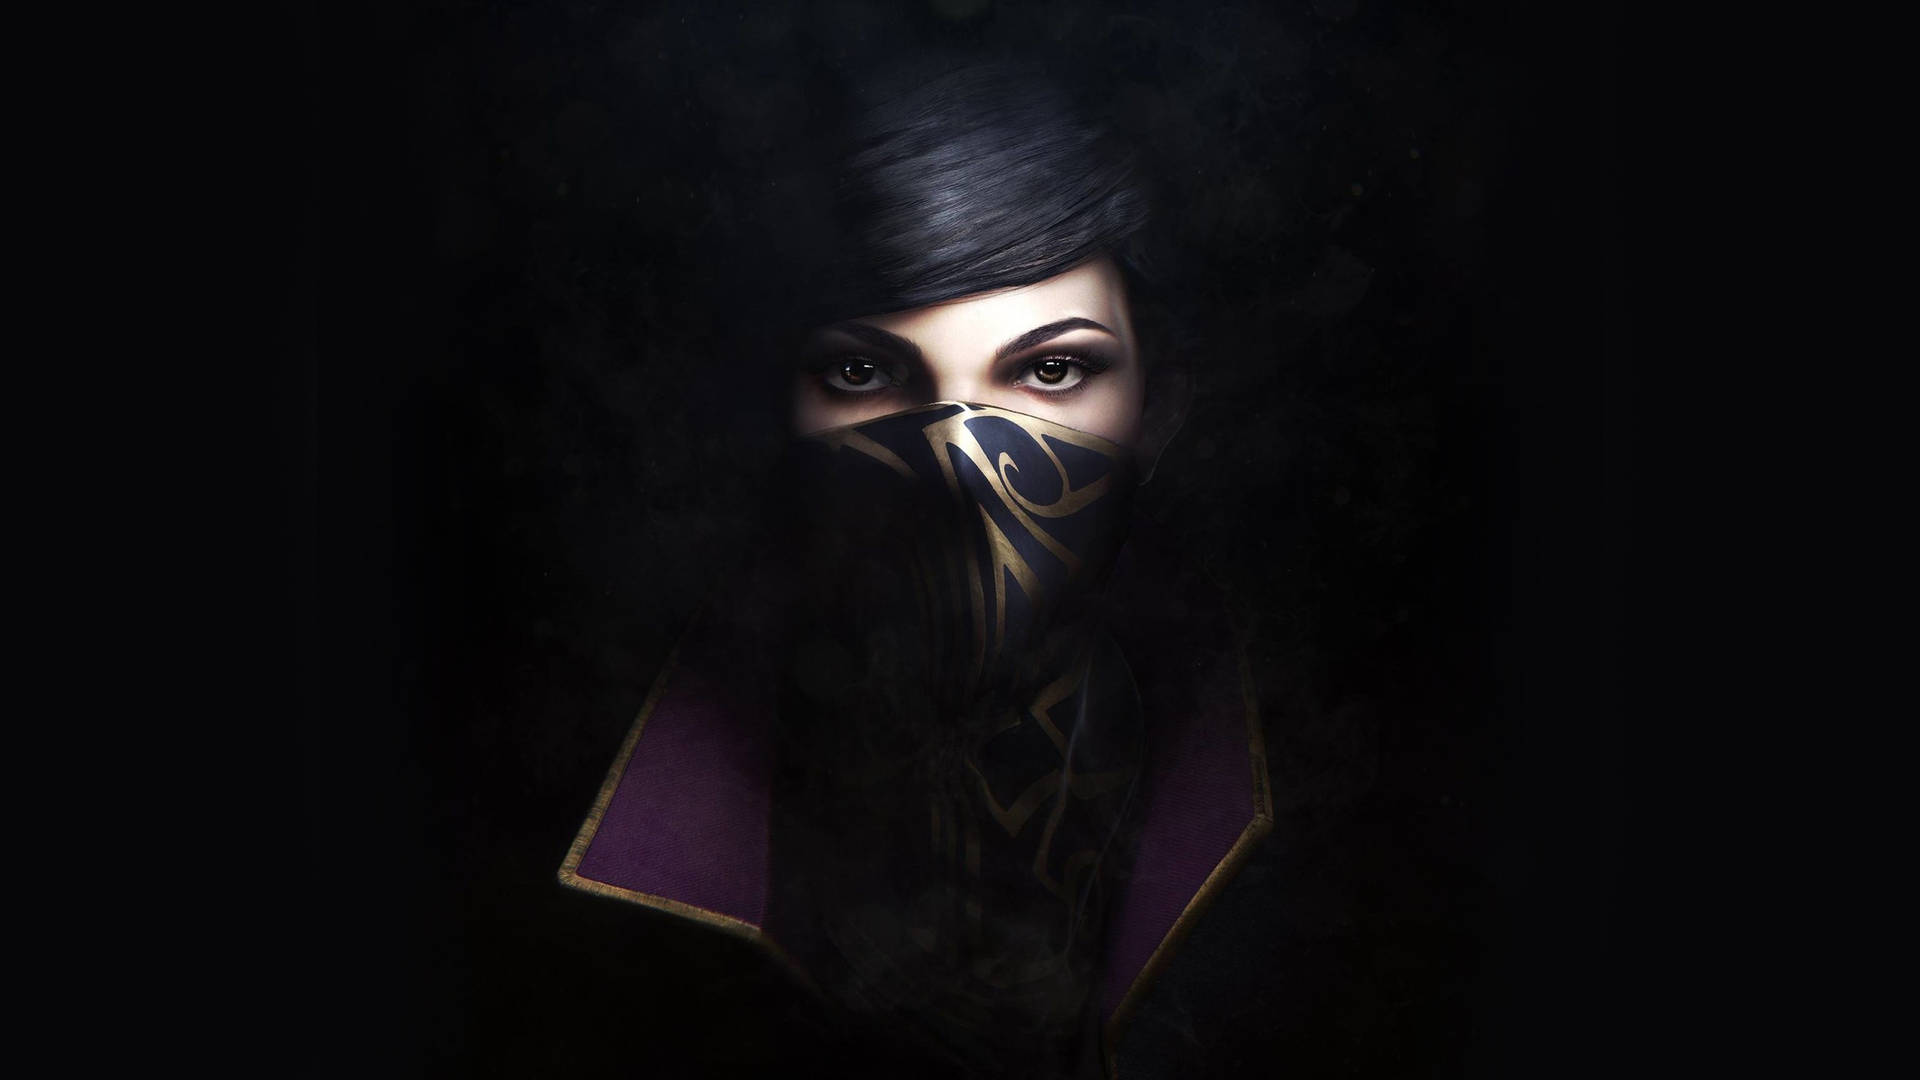 Dishonored 2 Emily Kaldwin In The Dark Wallpaper